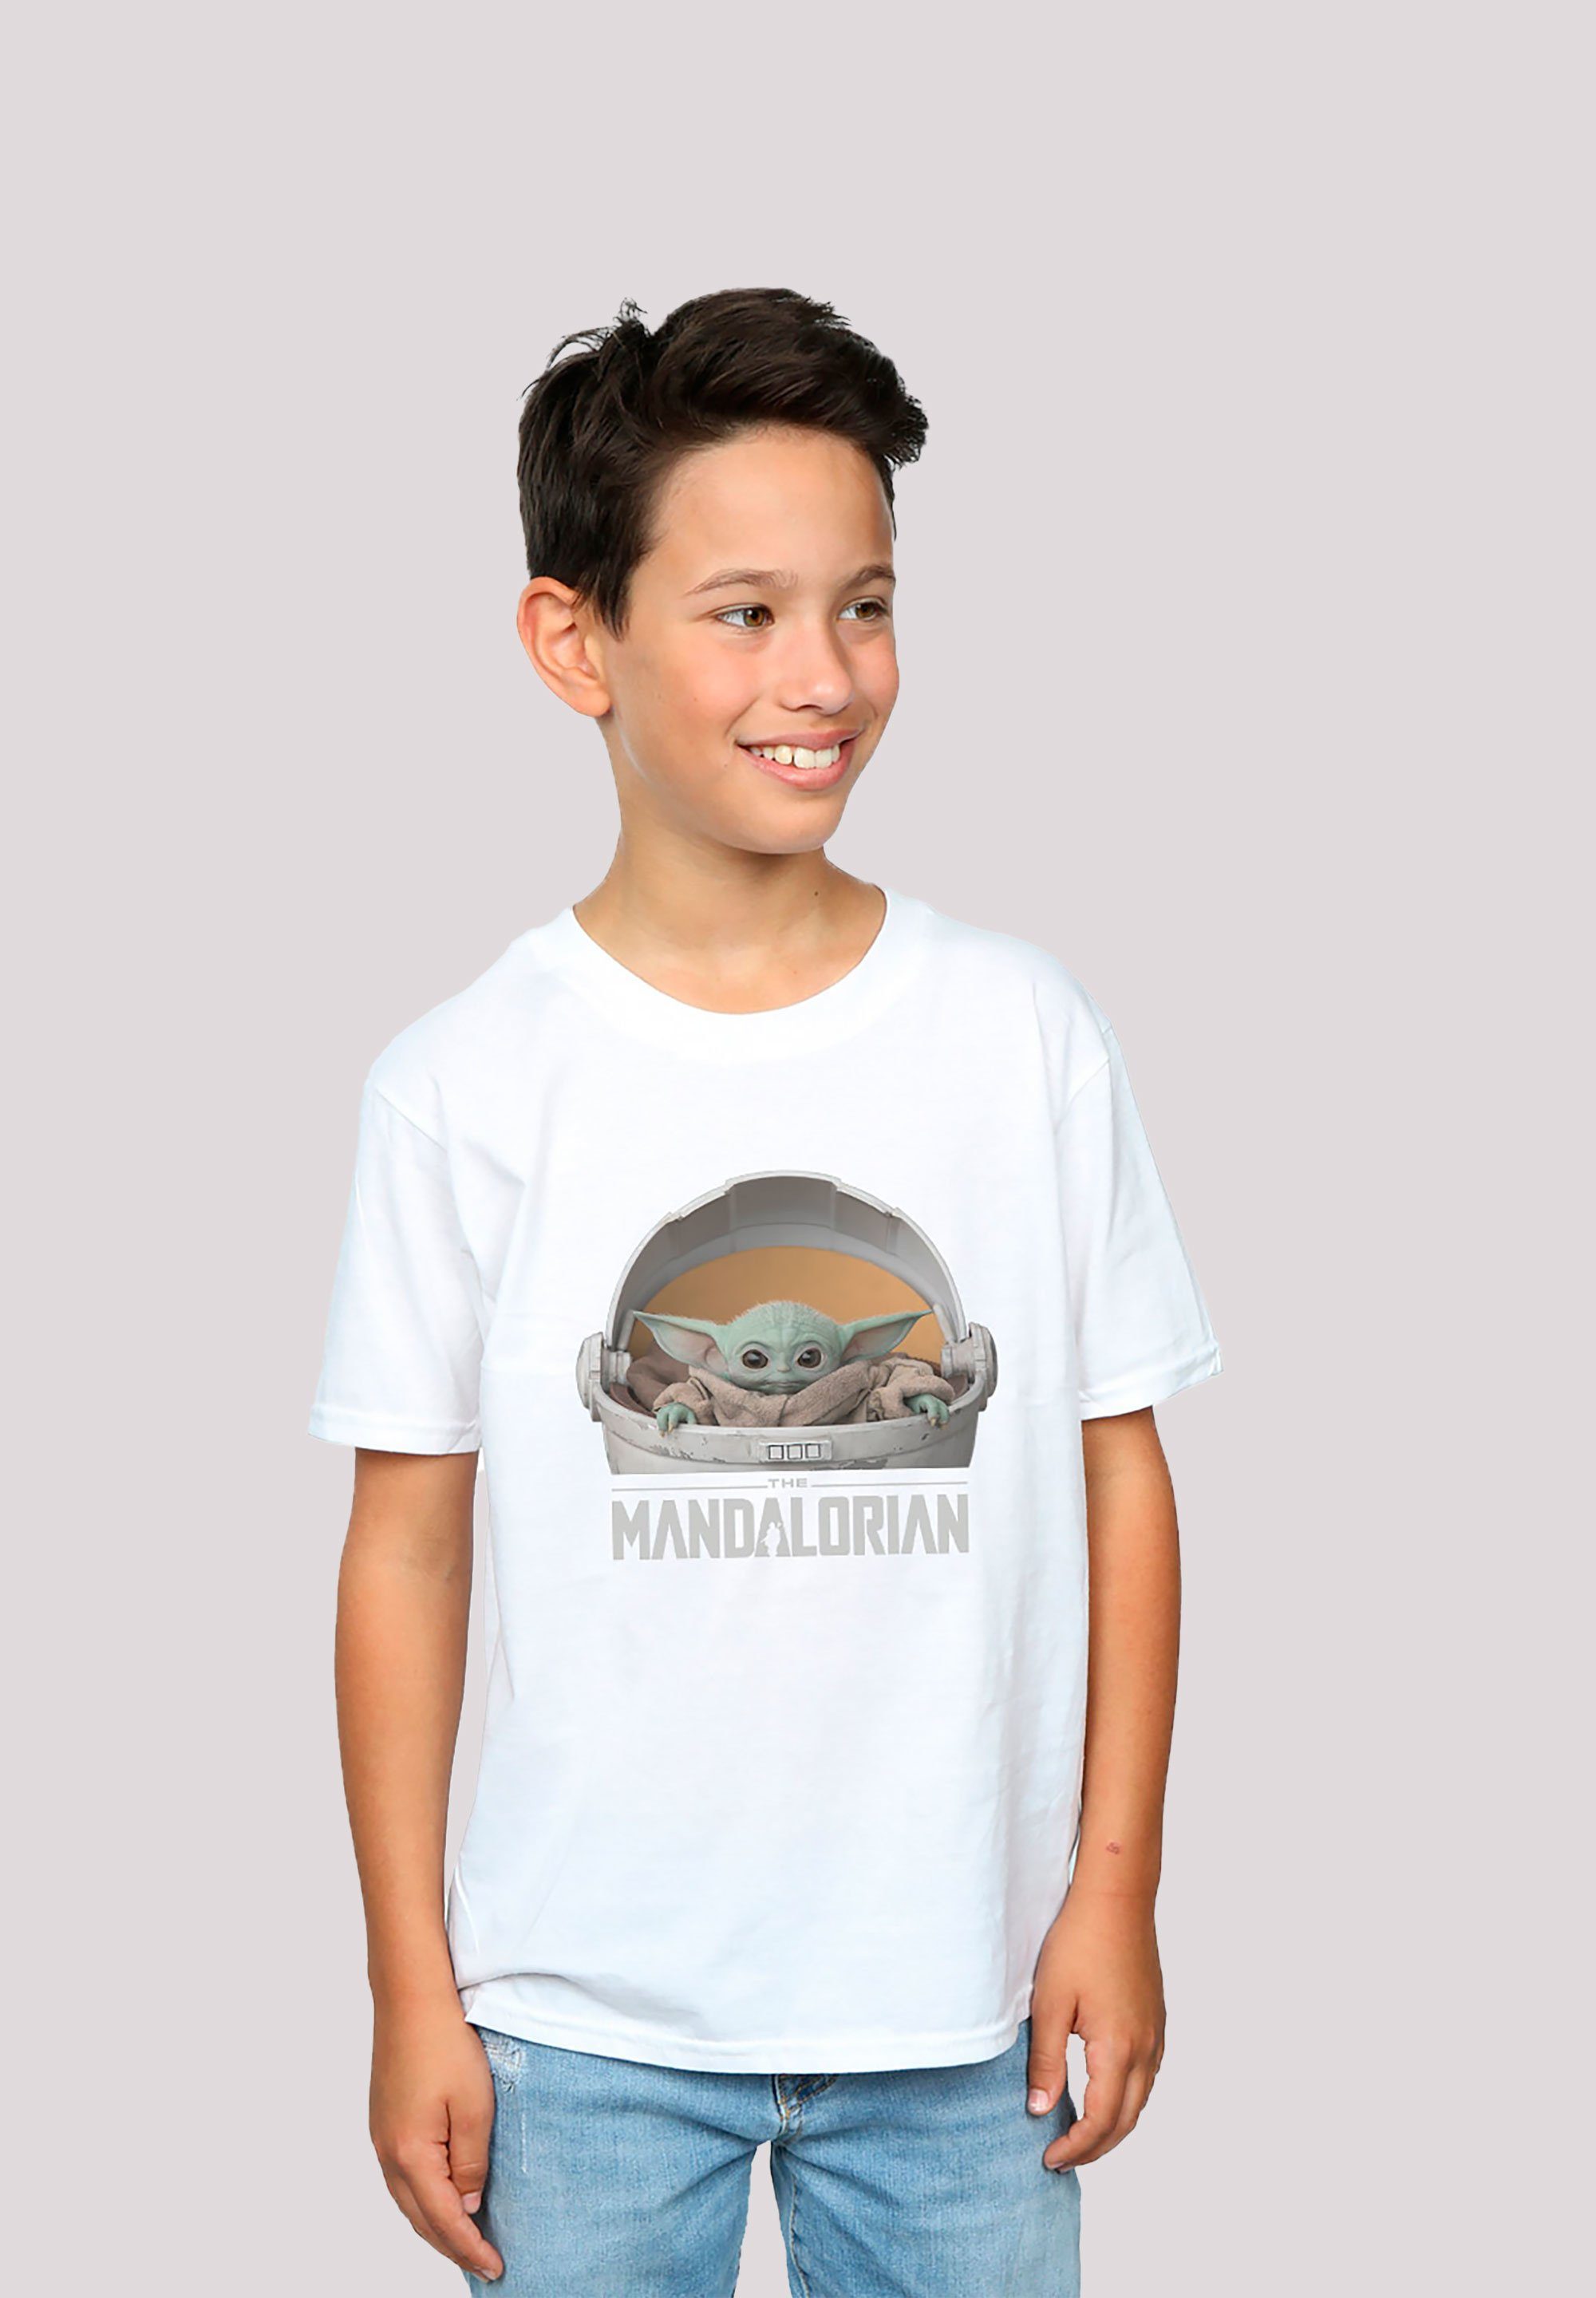 F4NT4STIC T-Shirt Star Print, Pod The Wars Wars Child Star The Mandalorian The Yoda Baby Mandalorian